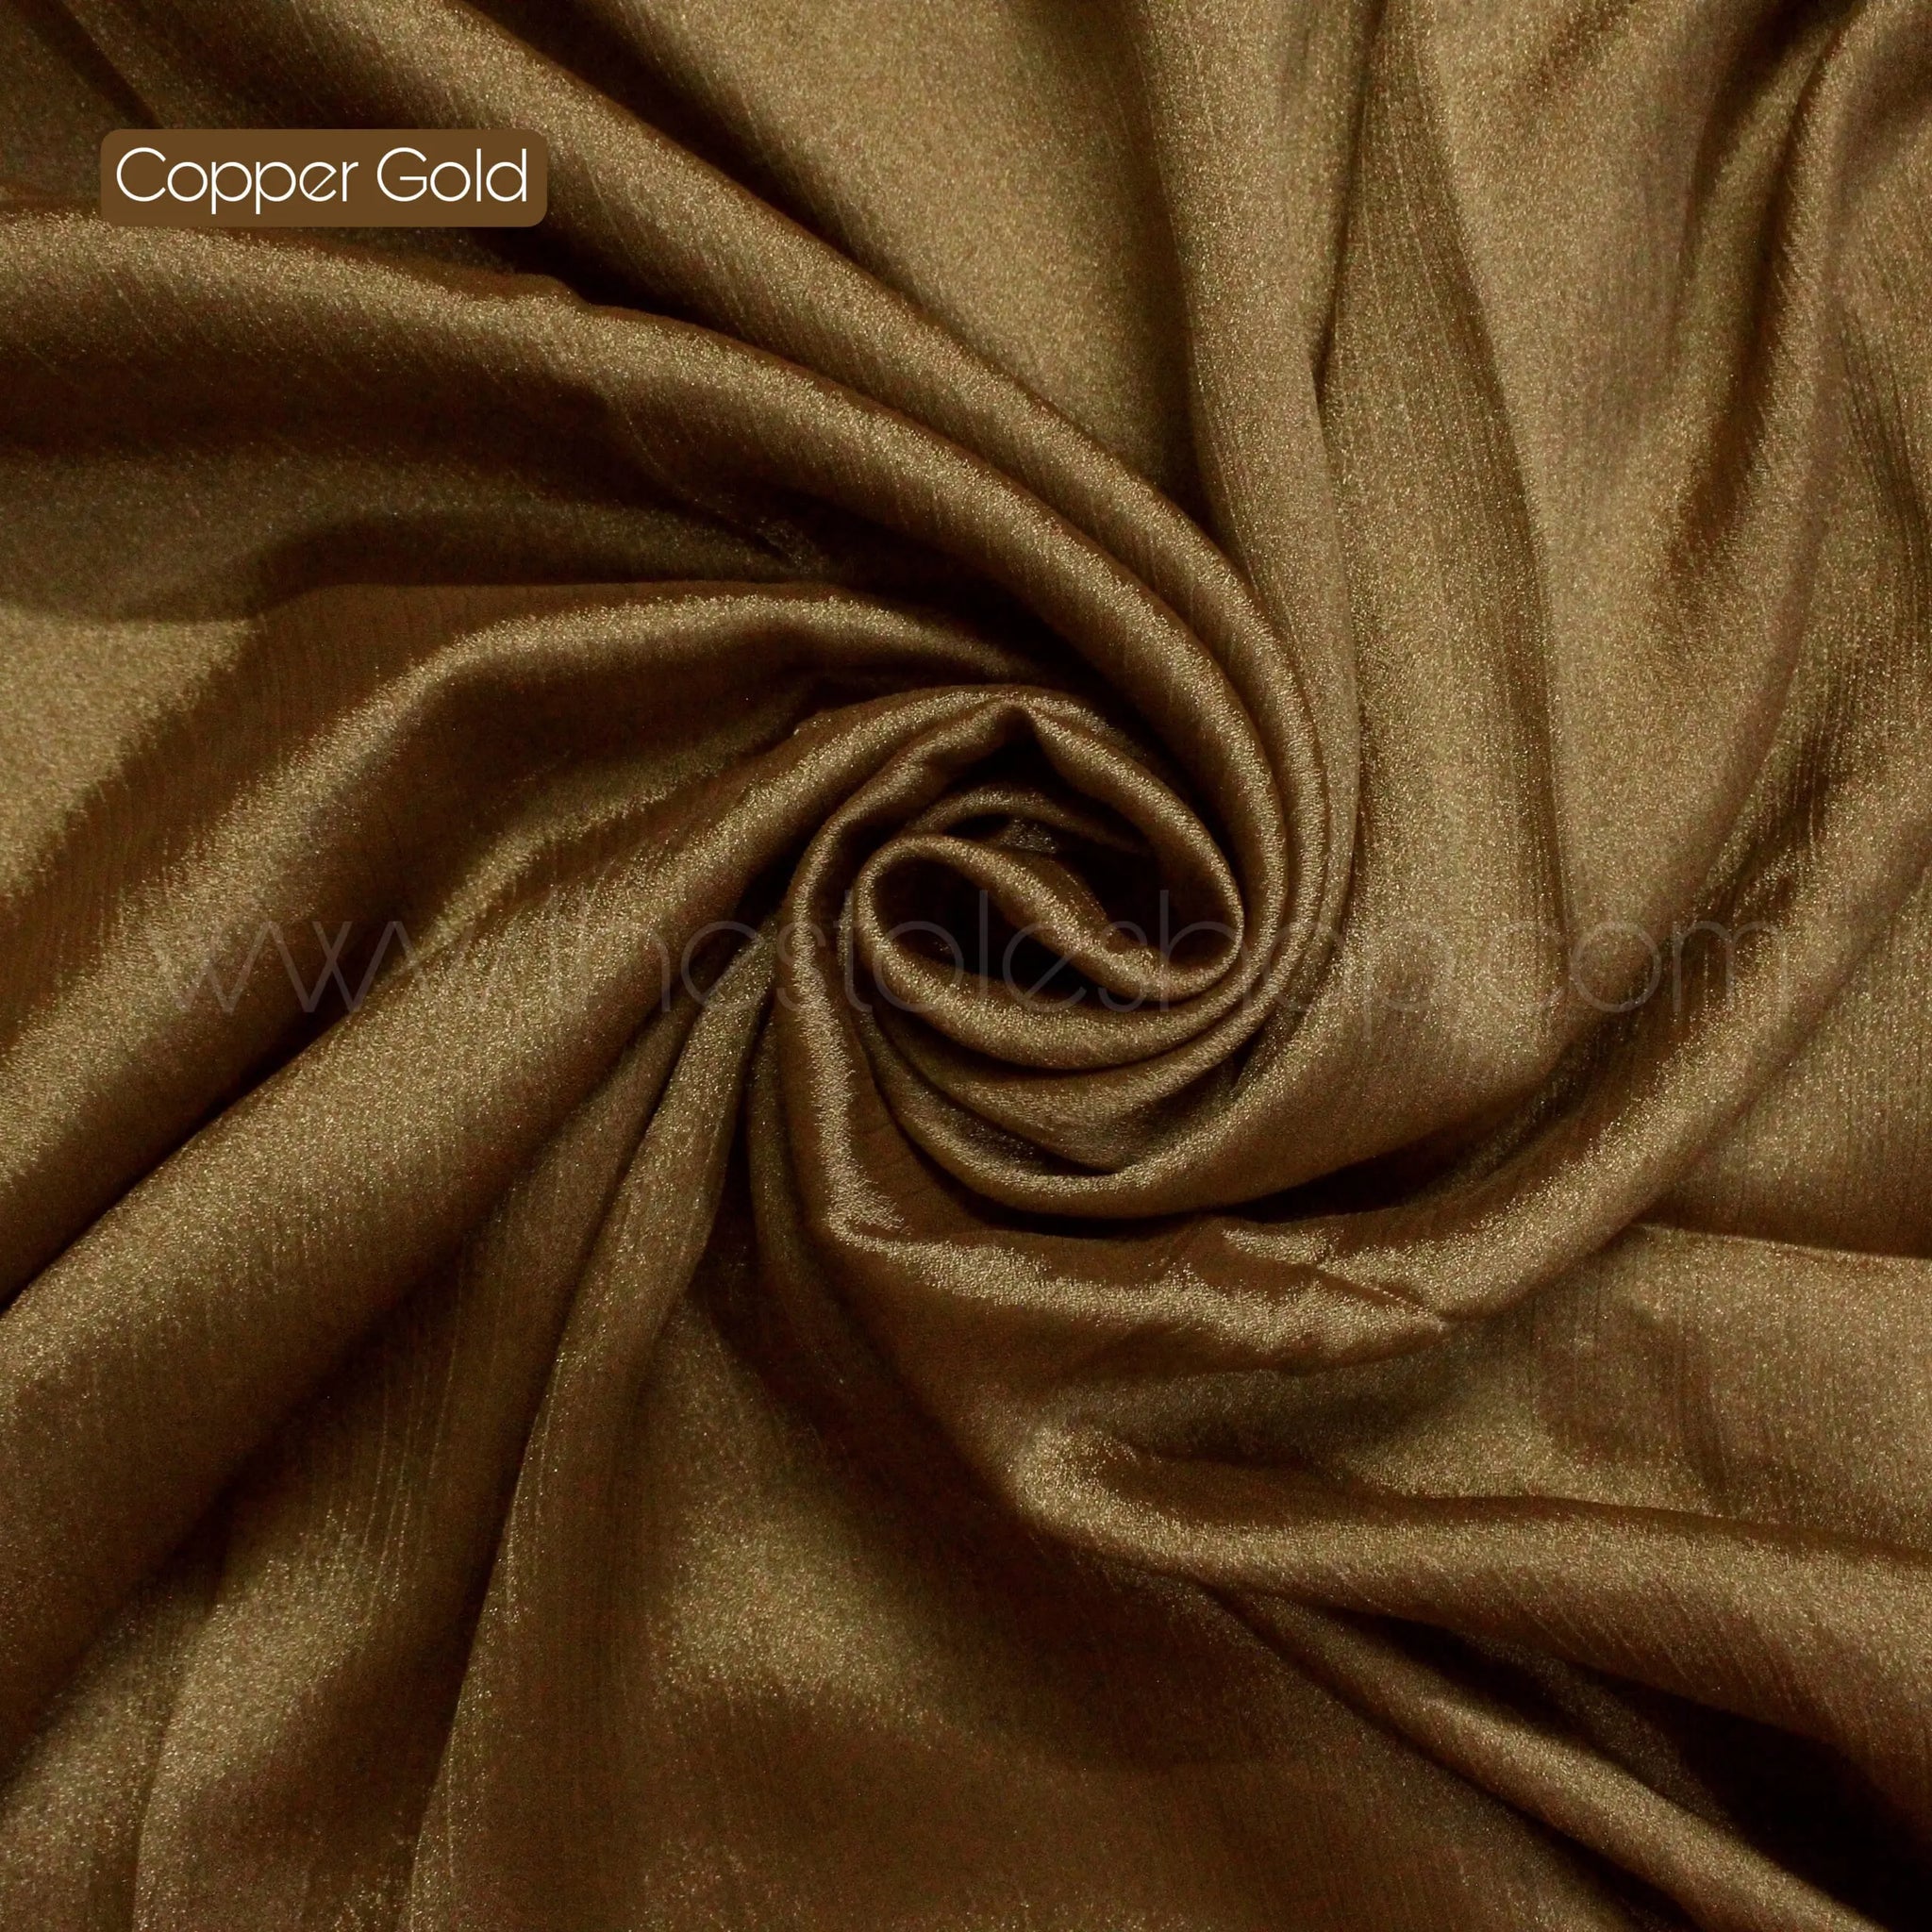 Metallics Gold – Copper Gold